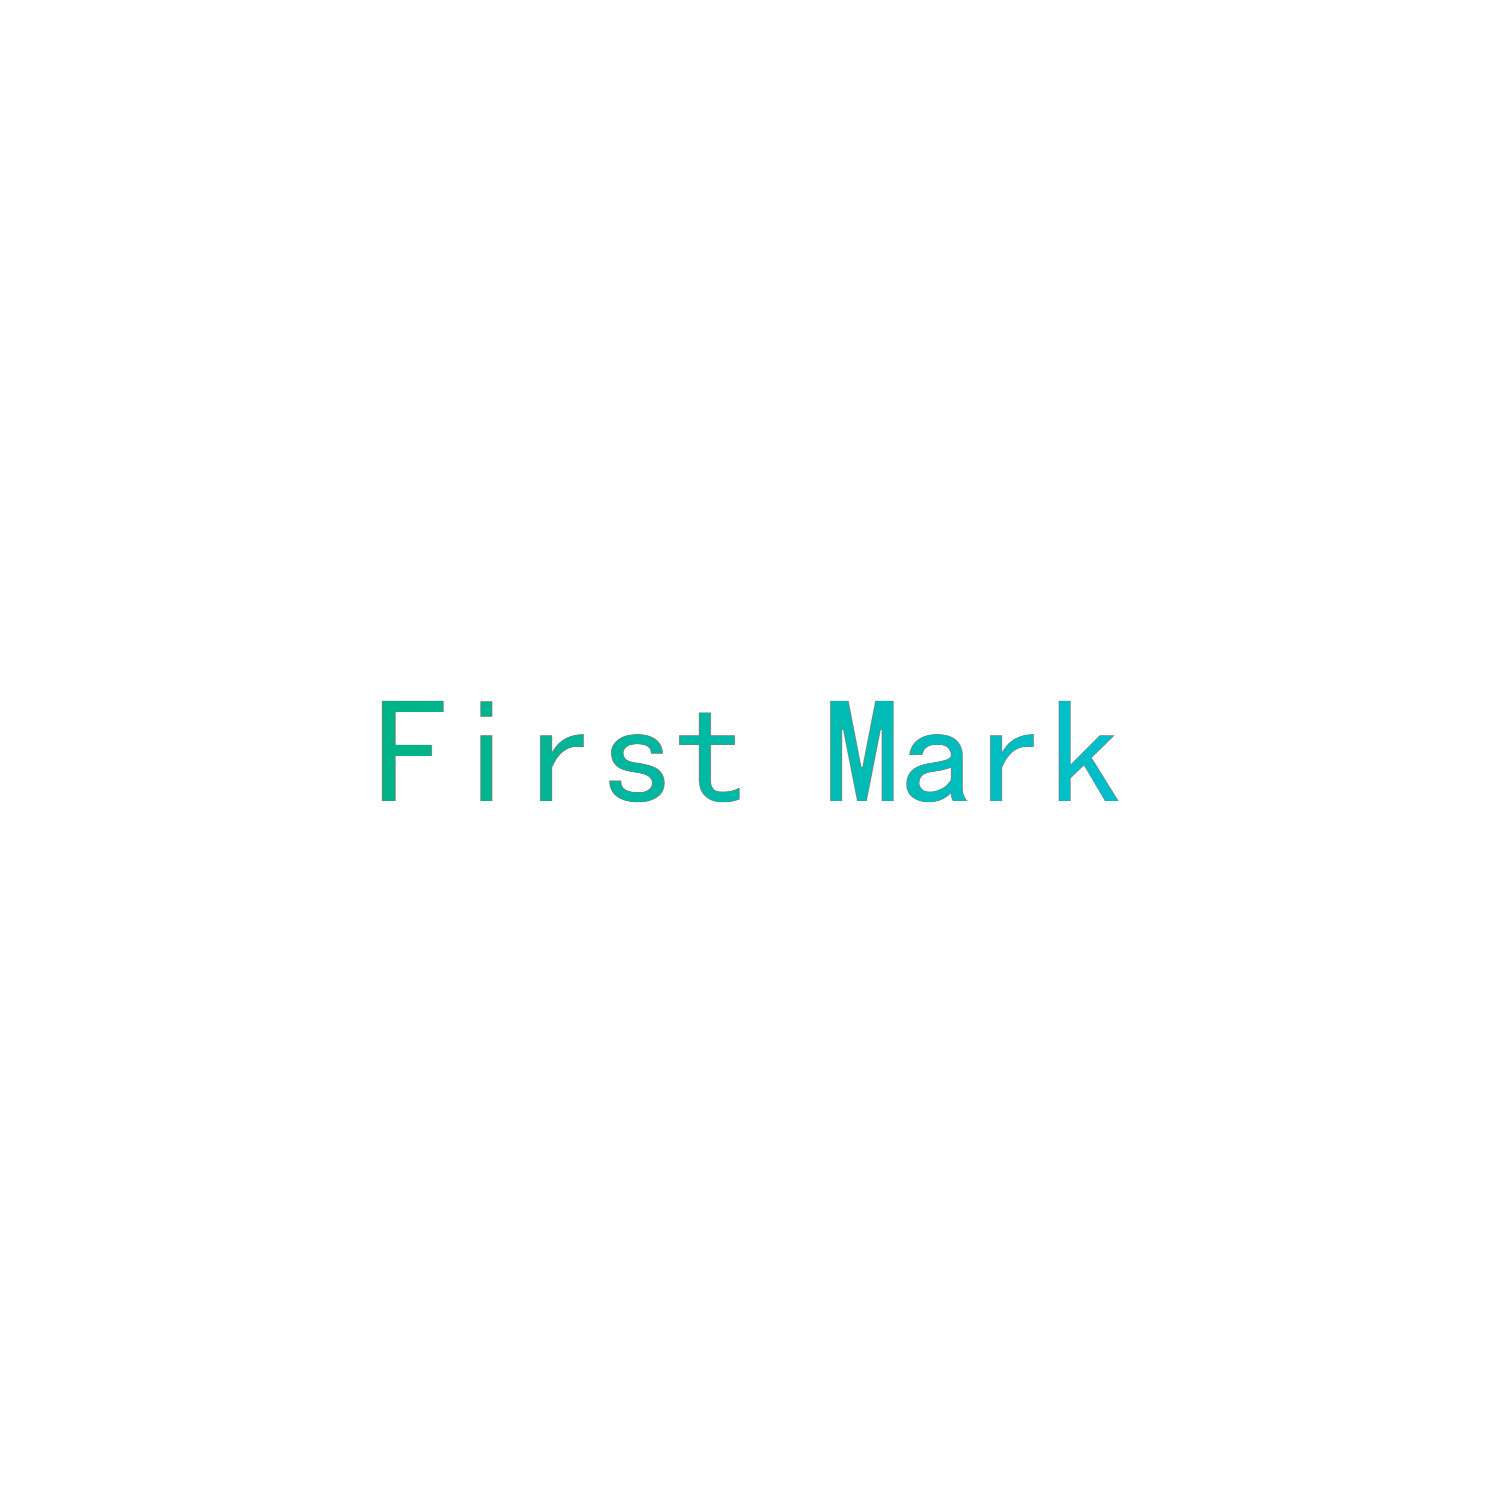 FIRST MARK